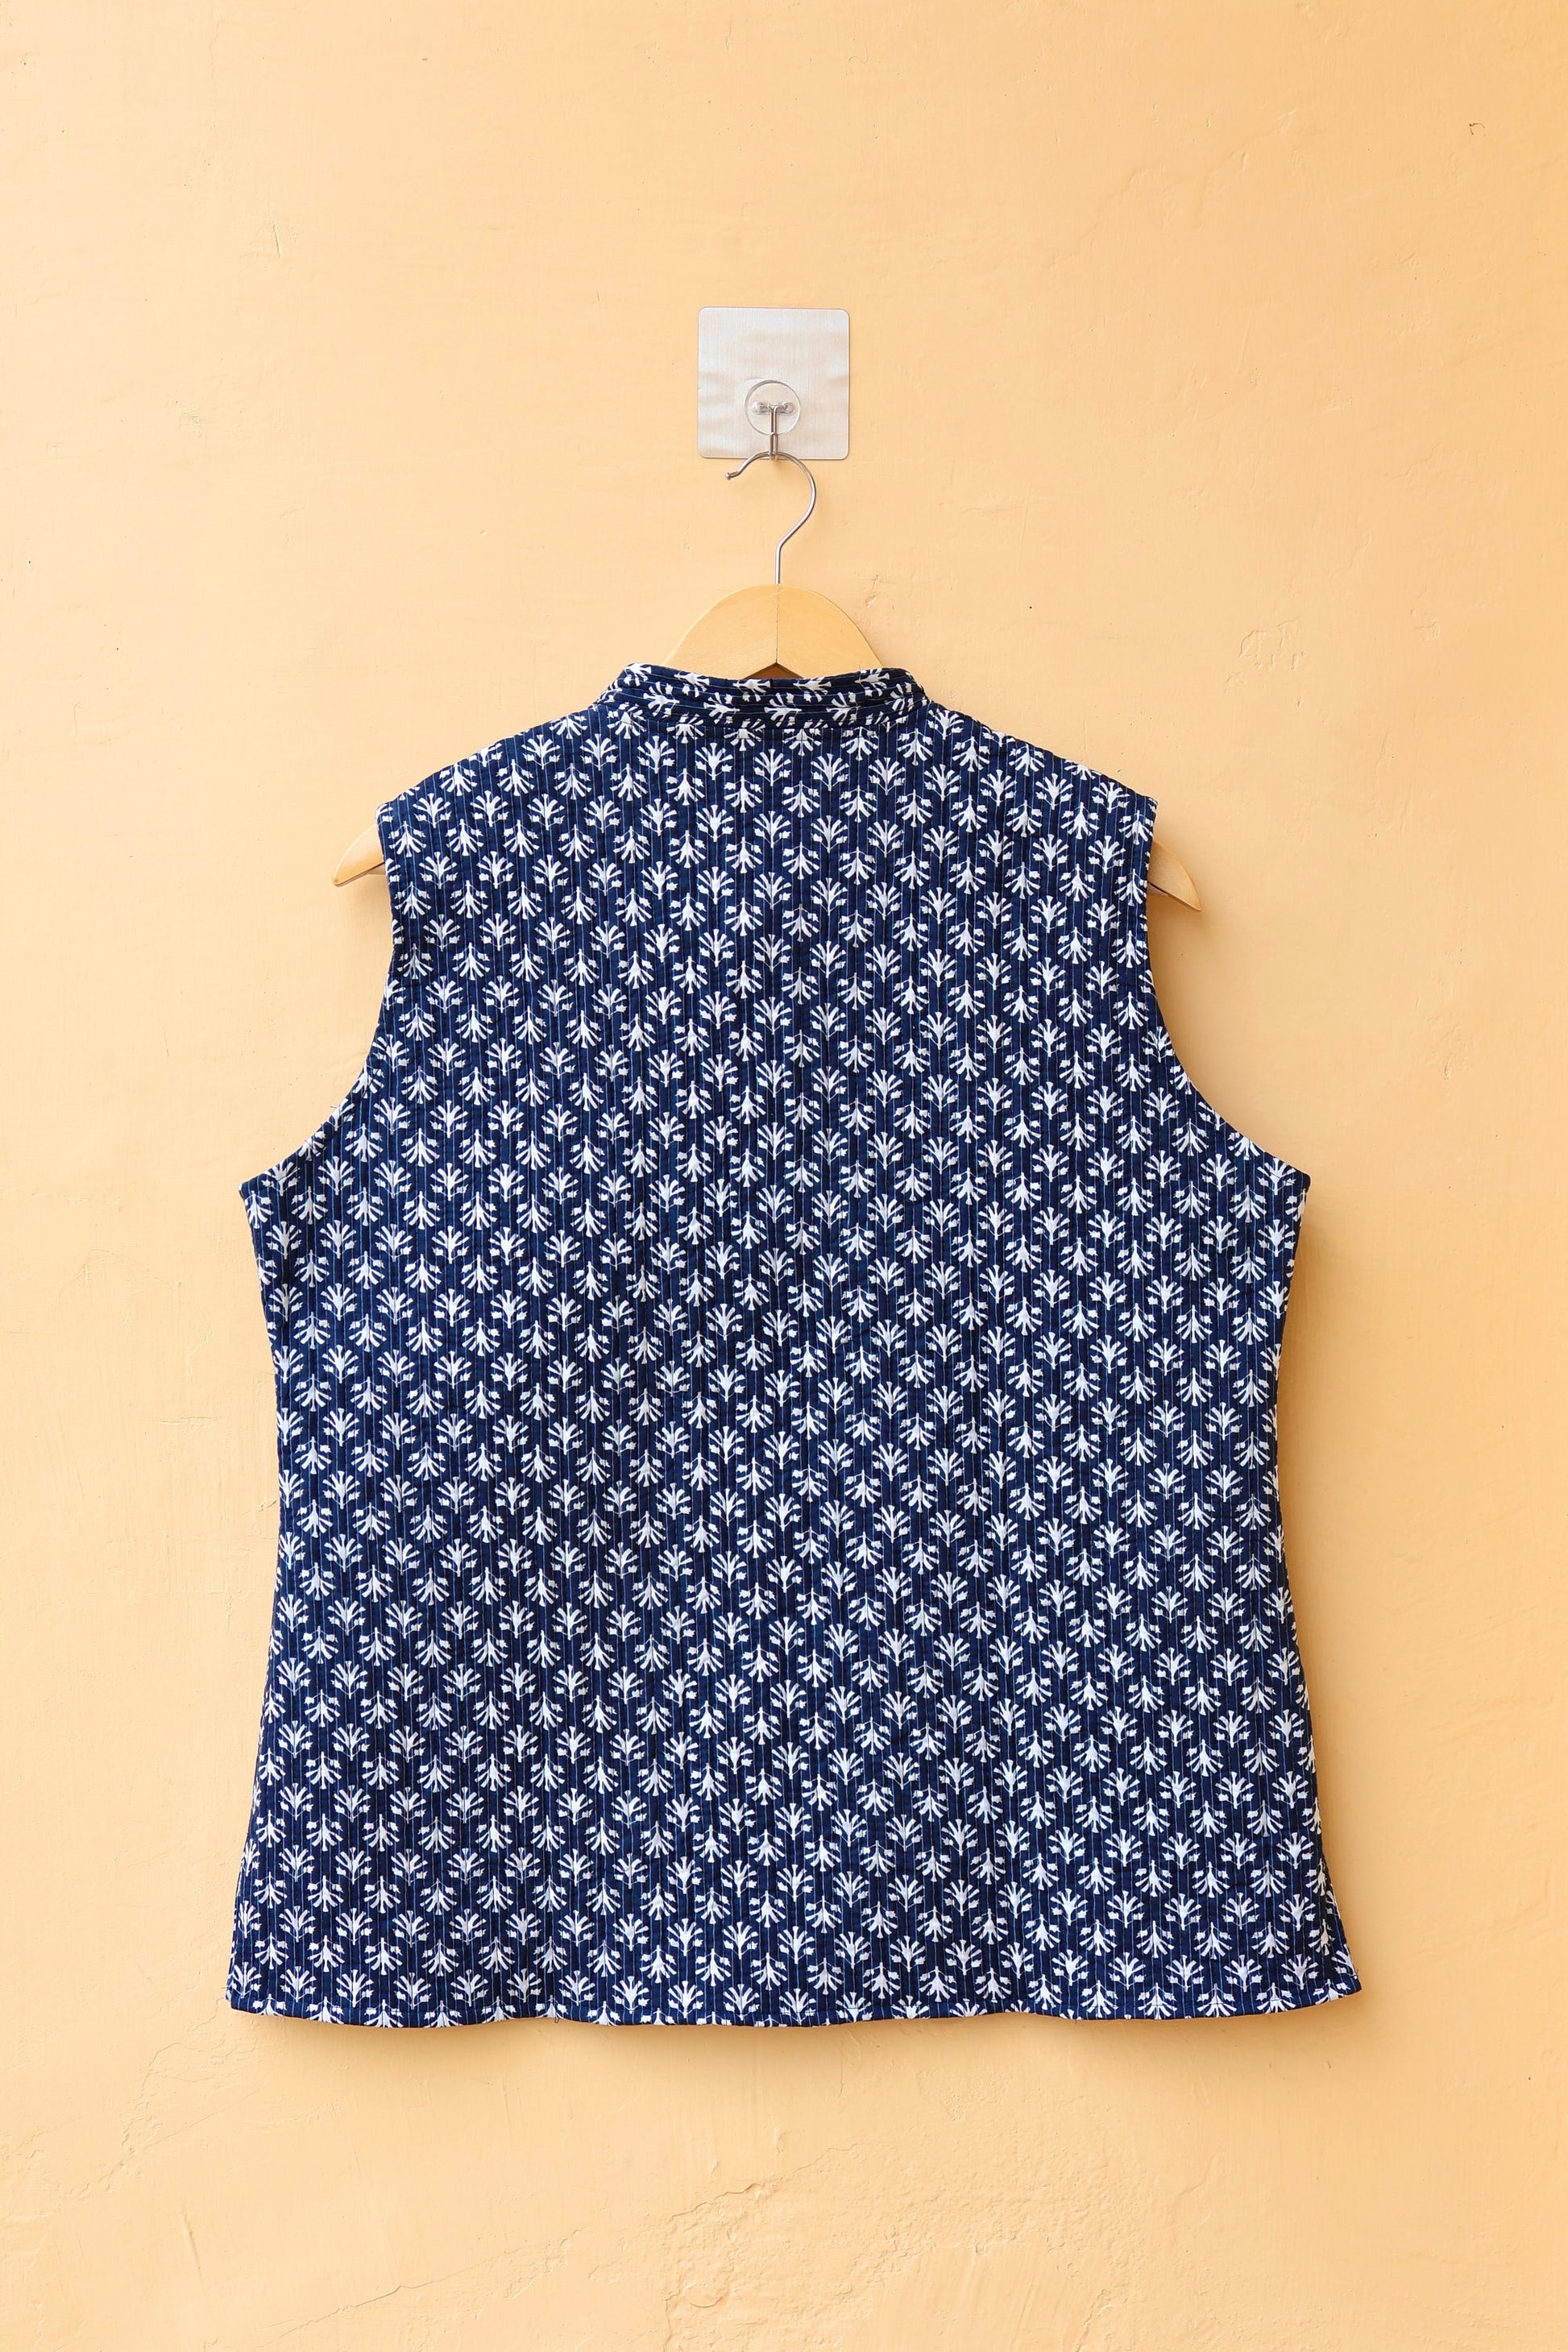 Indian Handmade Quilted Cotton Sleeveless Jacket Blue & White Stylish Women's Vest, Indigo Print Reversible Jacket, Gift for Her